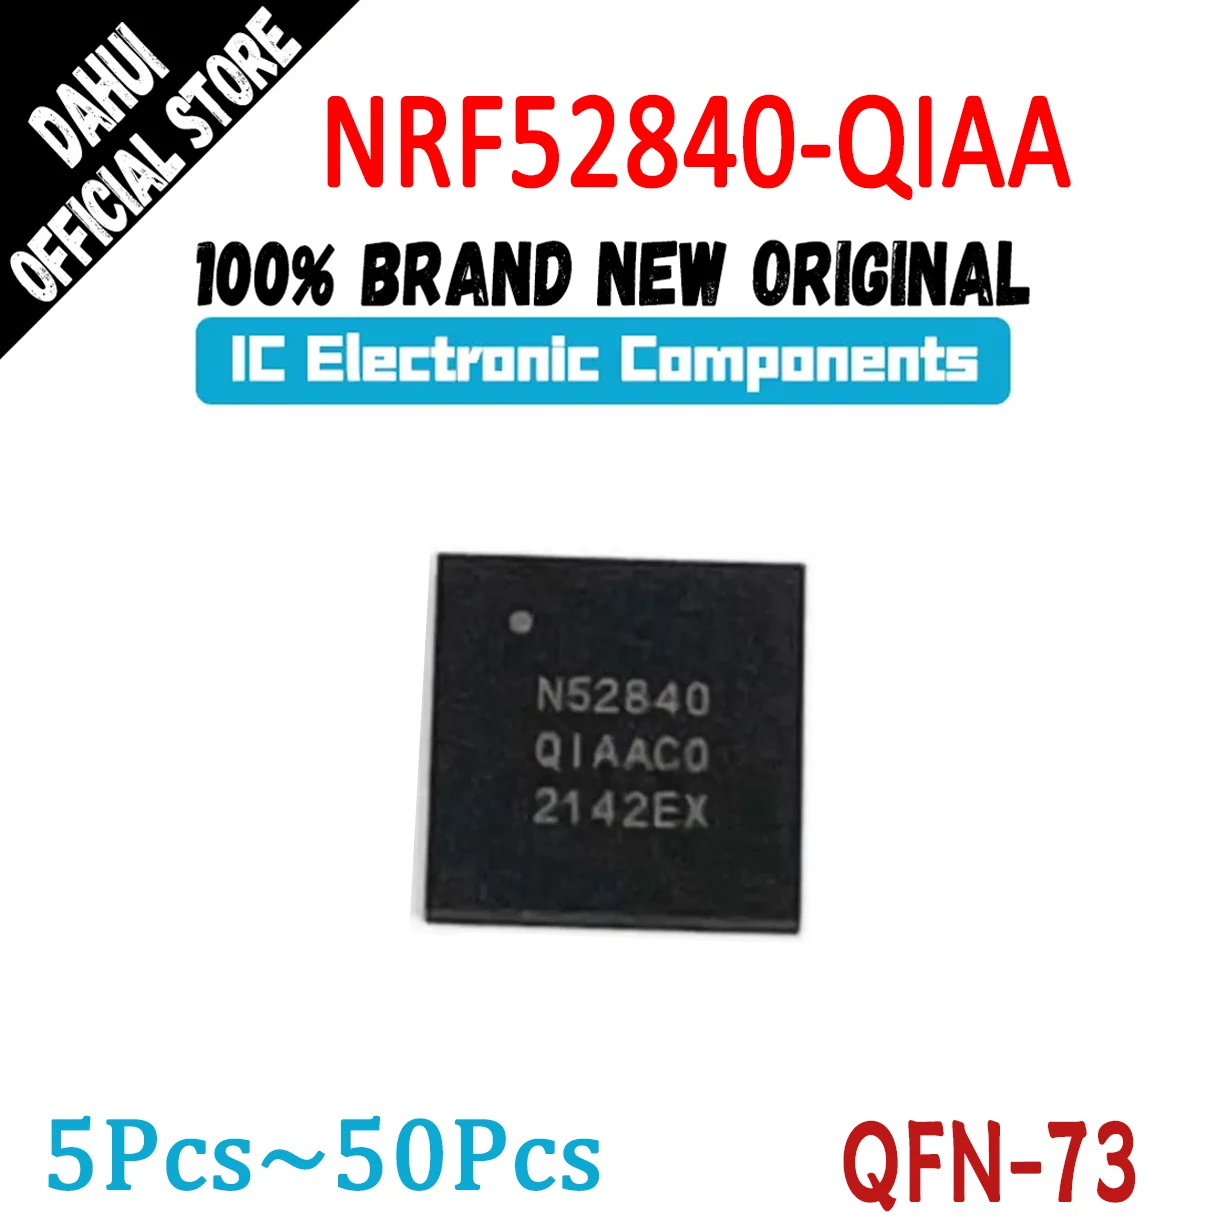 

NRF52840-QIAA NRF52840 N52840-QIAA N52840 QIAA NRF IC Chip QFN-73